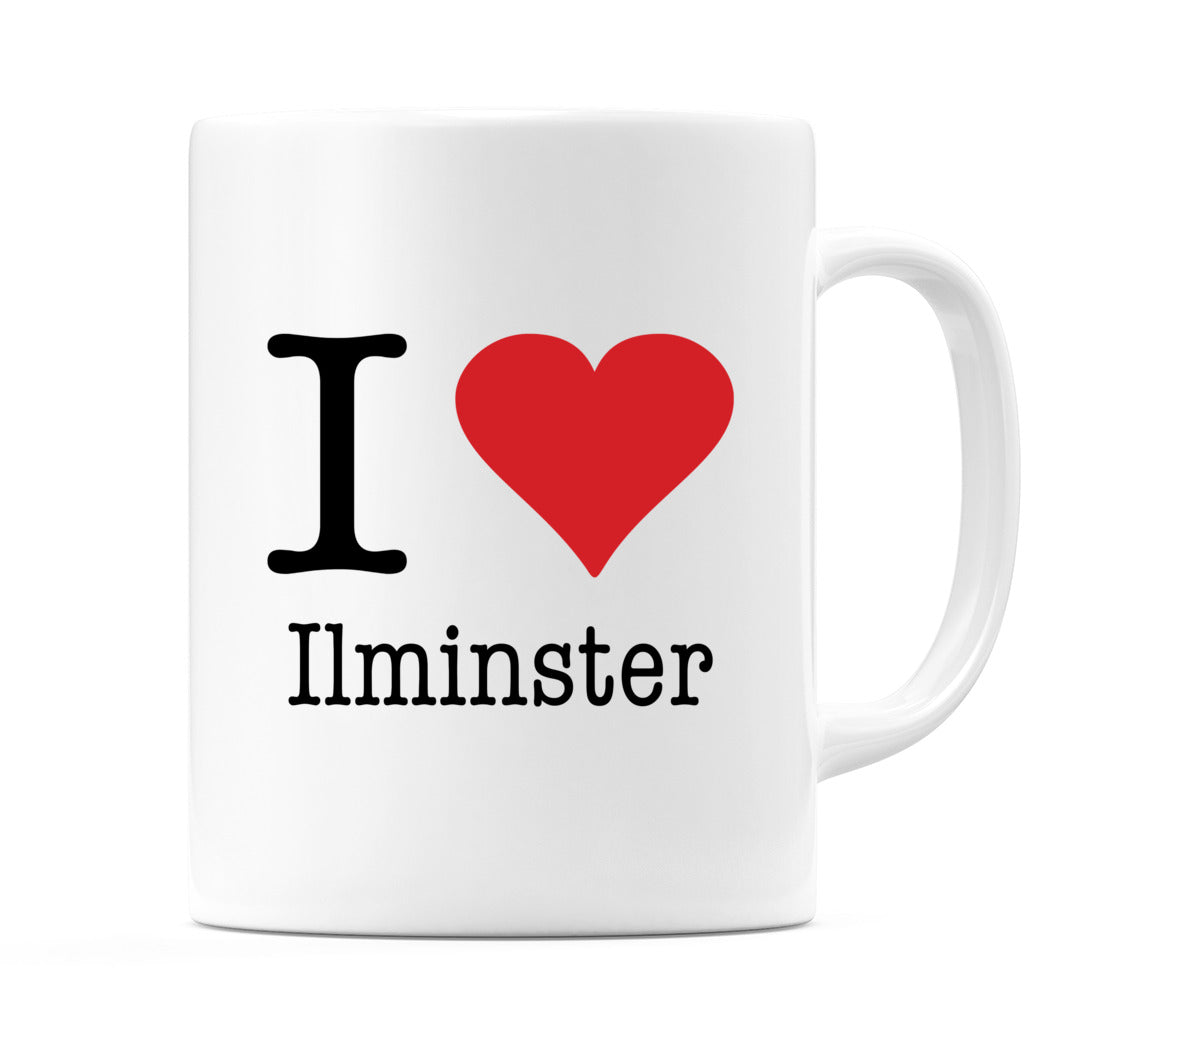 I Love Ilminster Mug